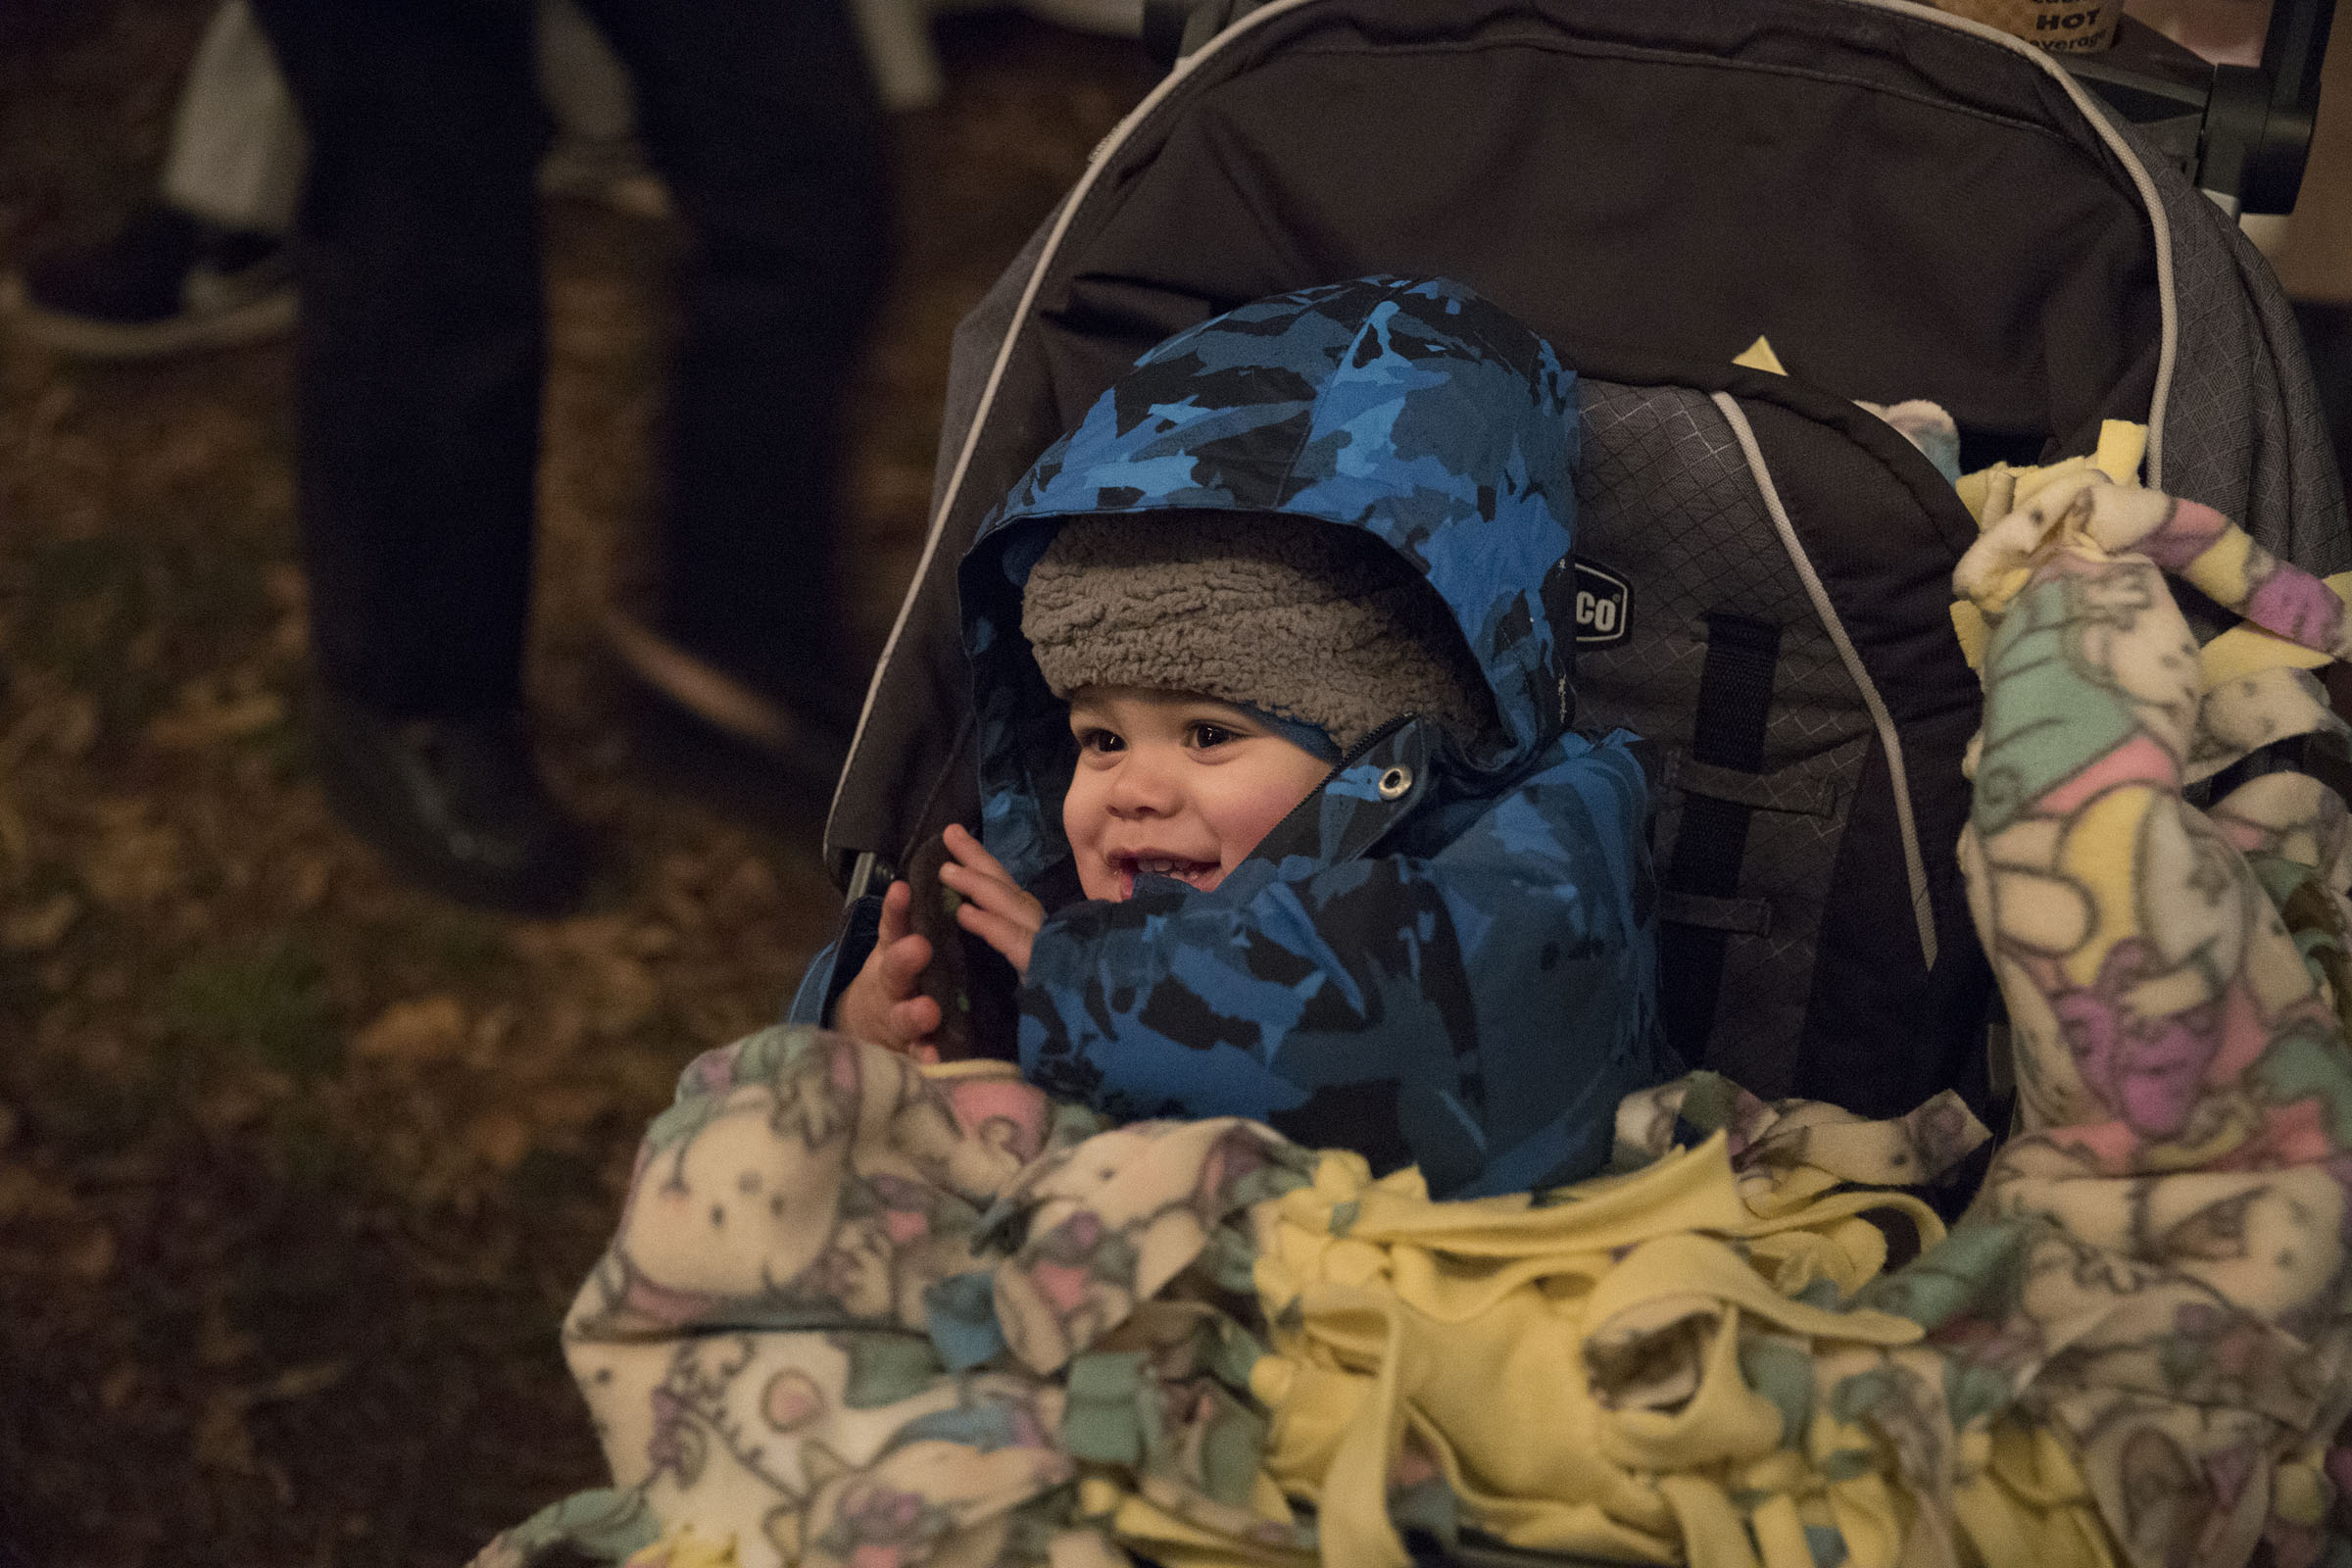 Fourteen-month-old Lucas Reinhard bundled up in their stroller